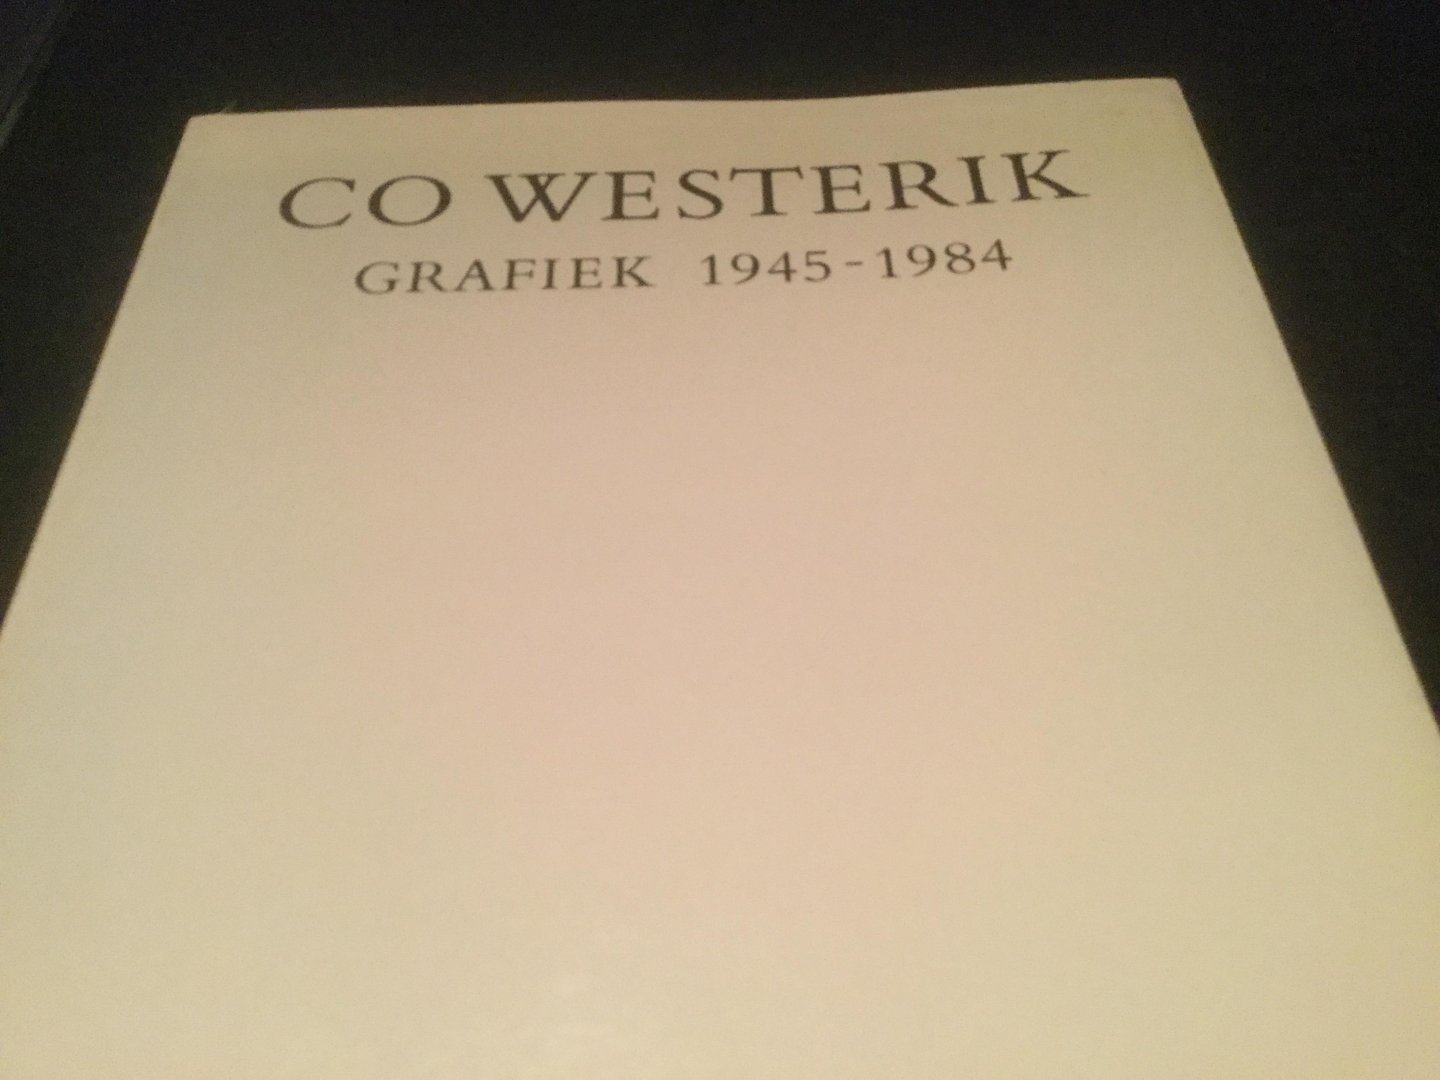  - Co westerik grafiek 1945-1984 / druk 1